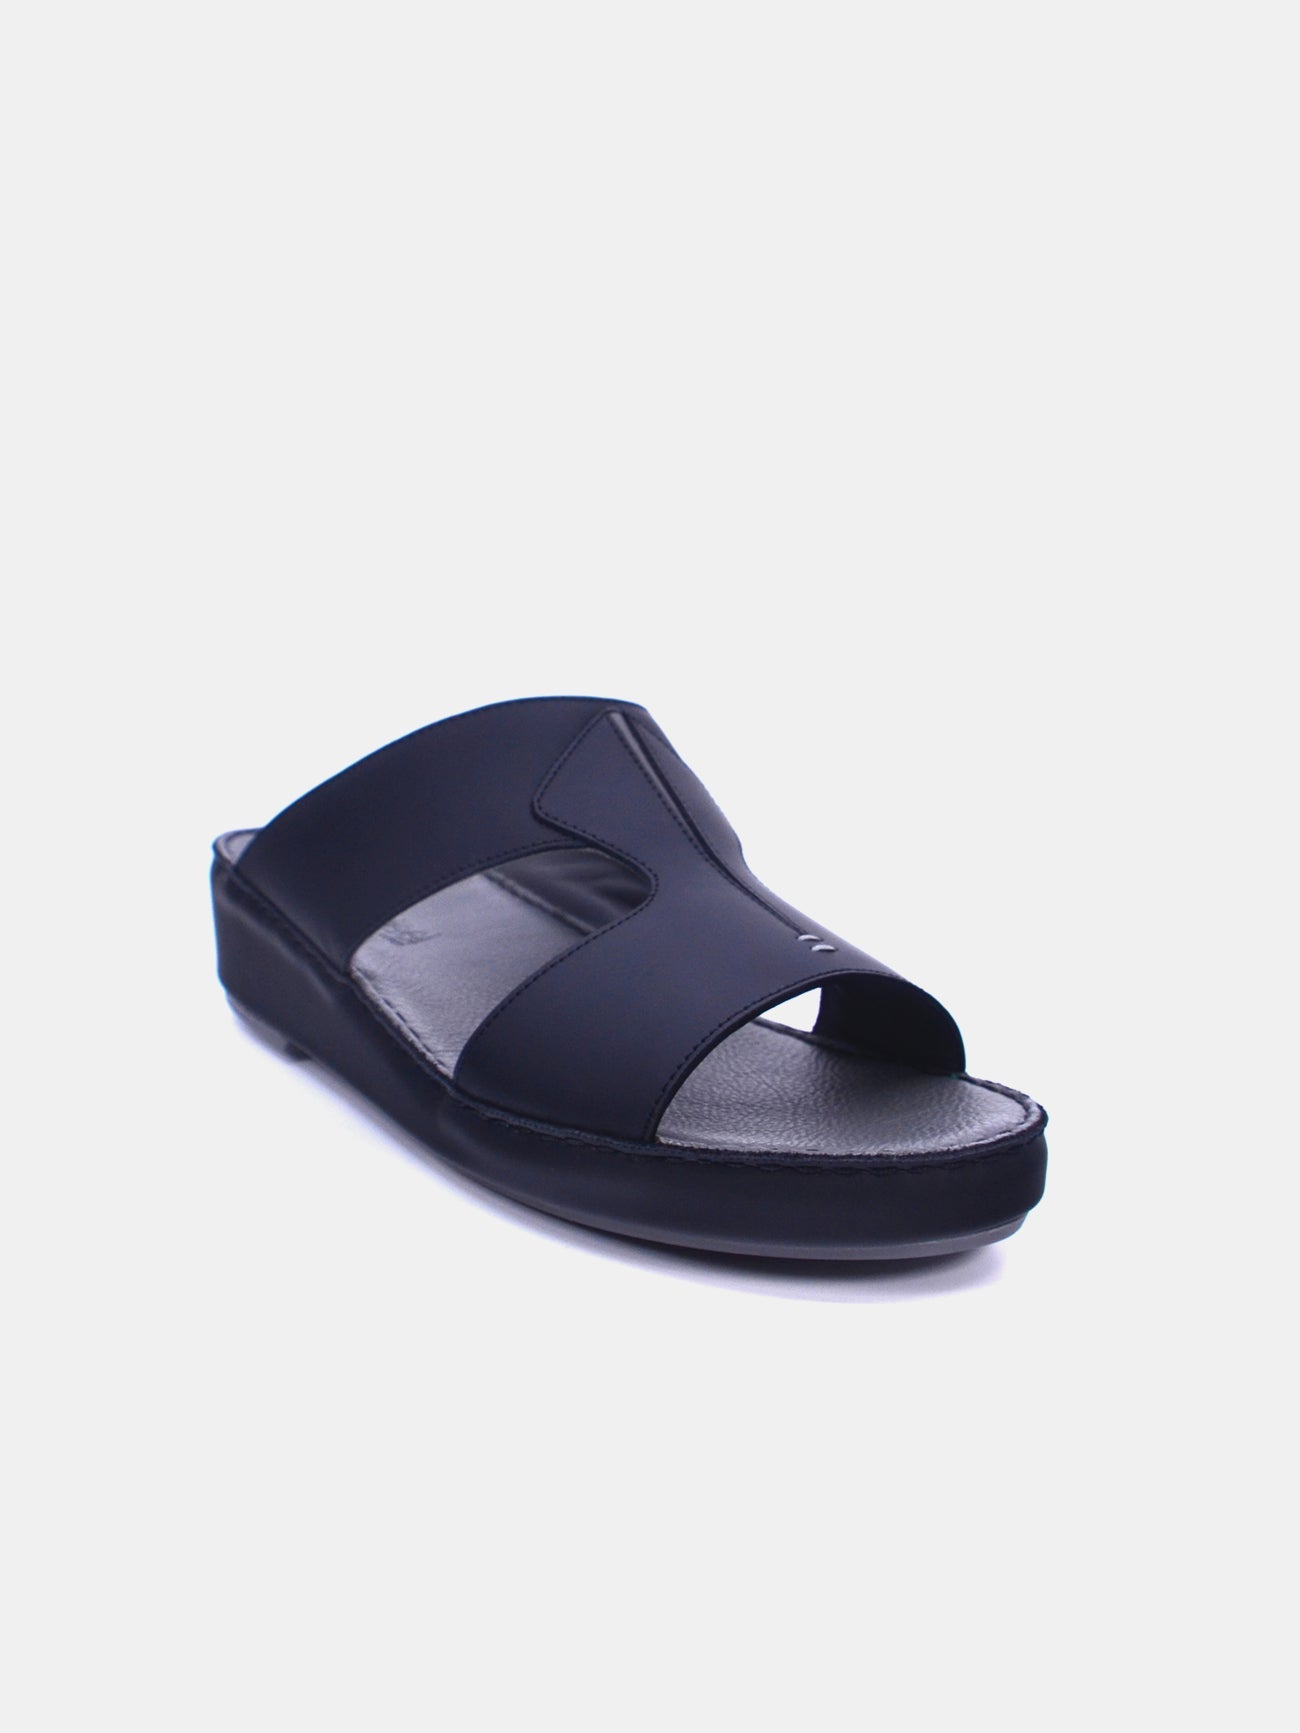 Barjeel Uno SP-101 Men's Sandals #color_Black